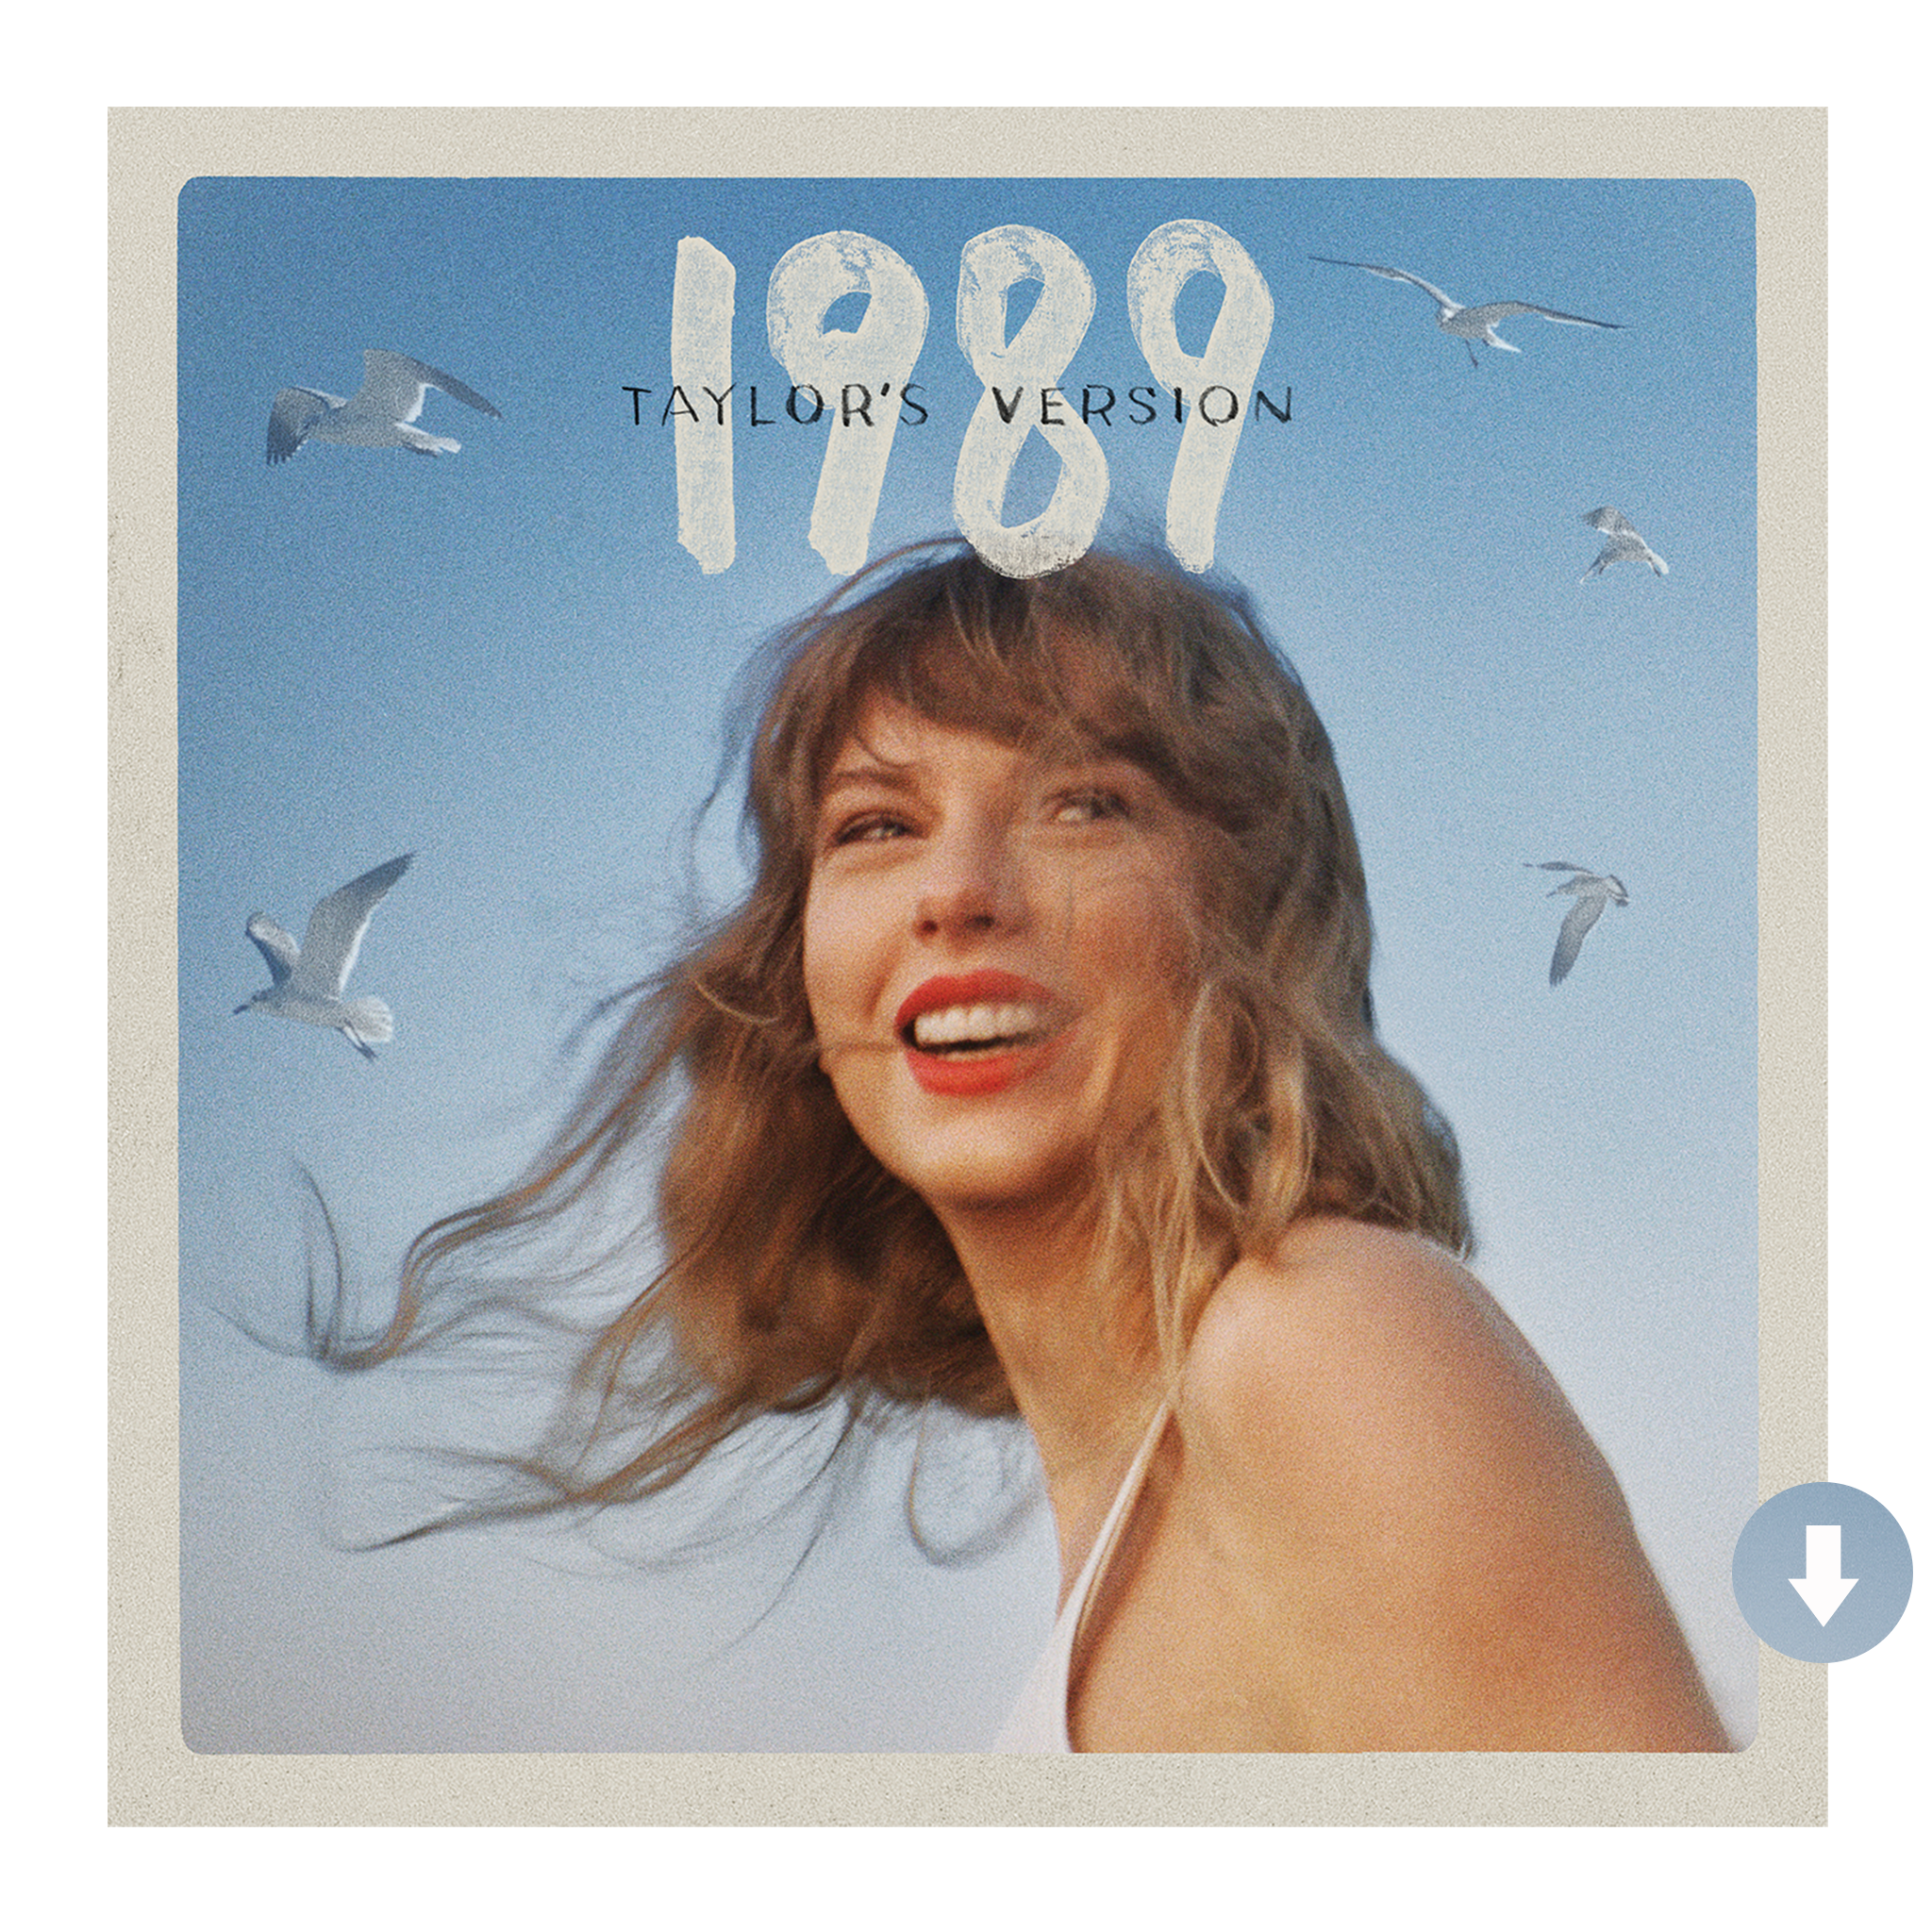 1989 (Taylor's Version) Digital Album - Taylor Swift Official Store